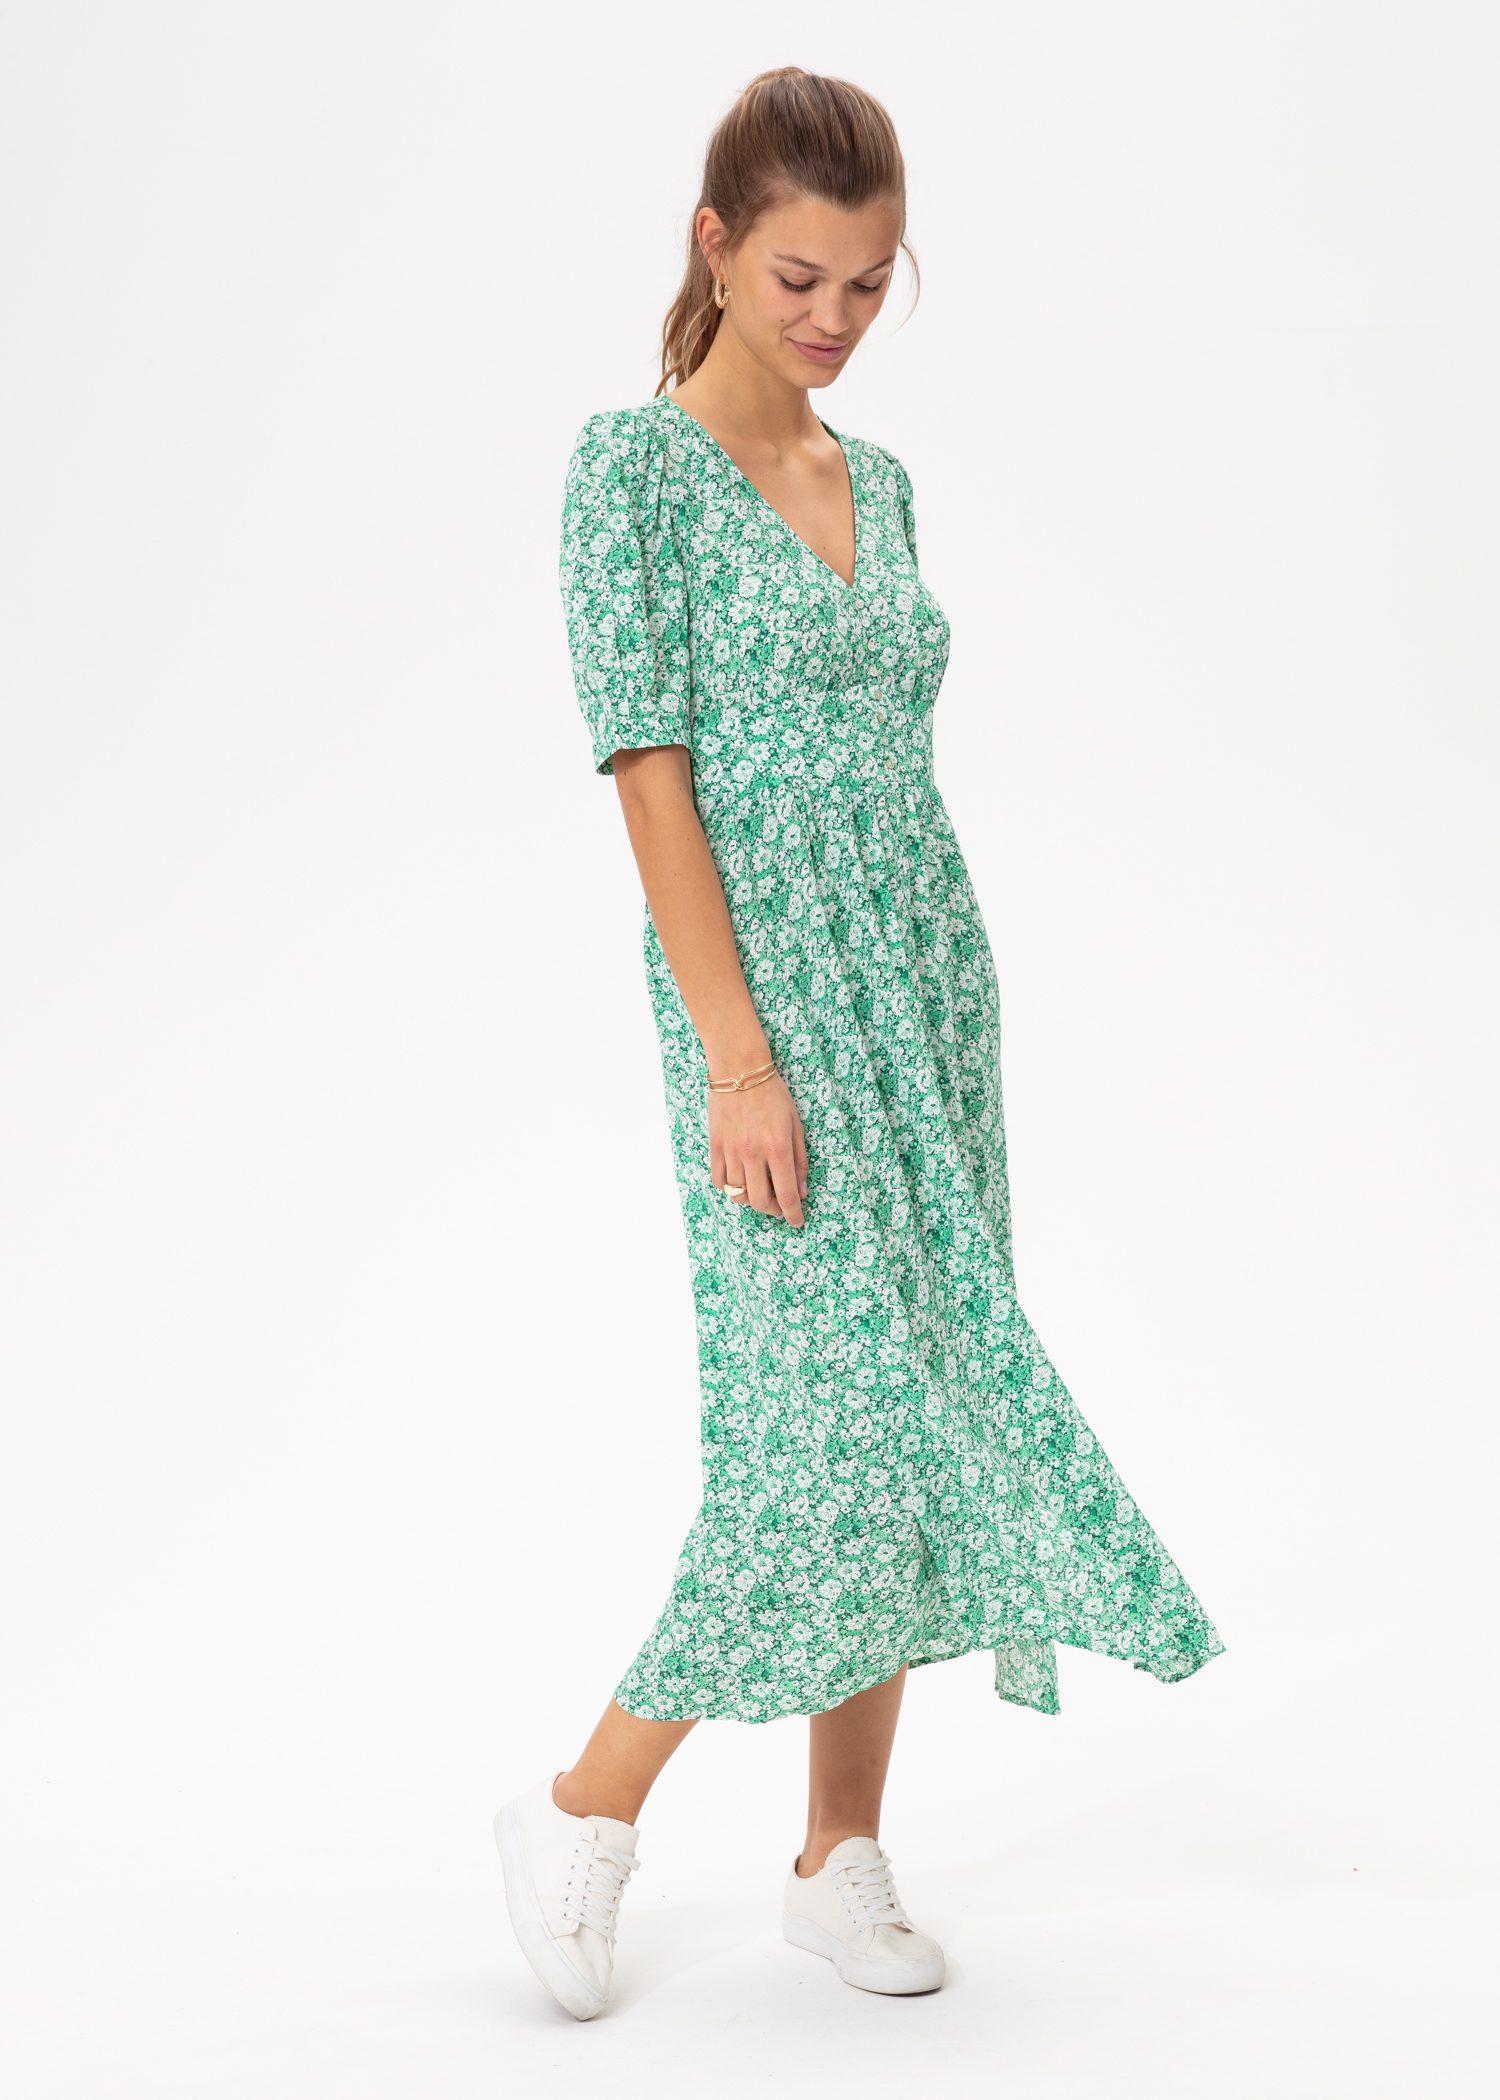 Kurzärmliges Kleid mit Muster Image 0